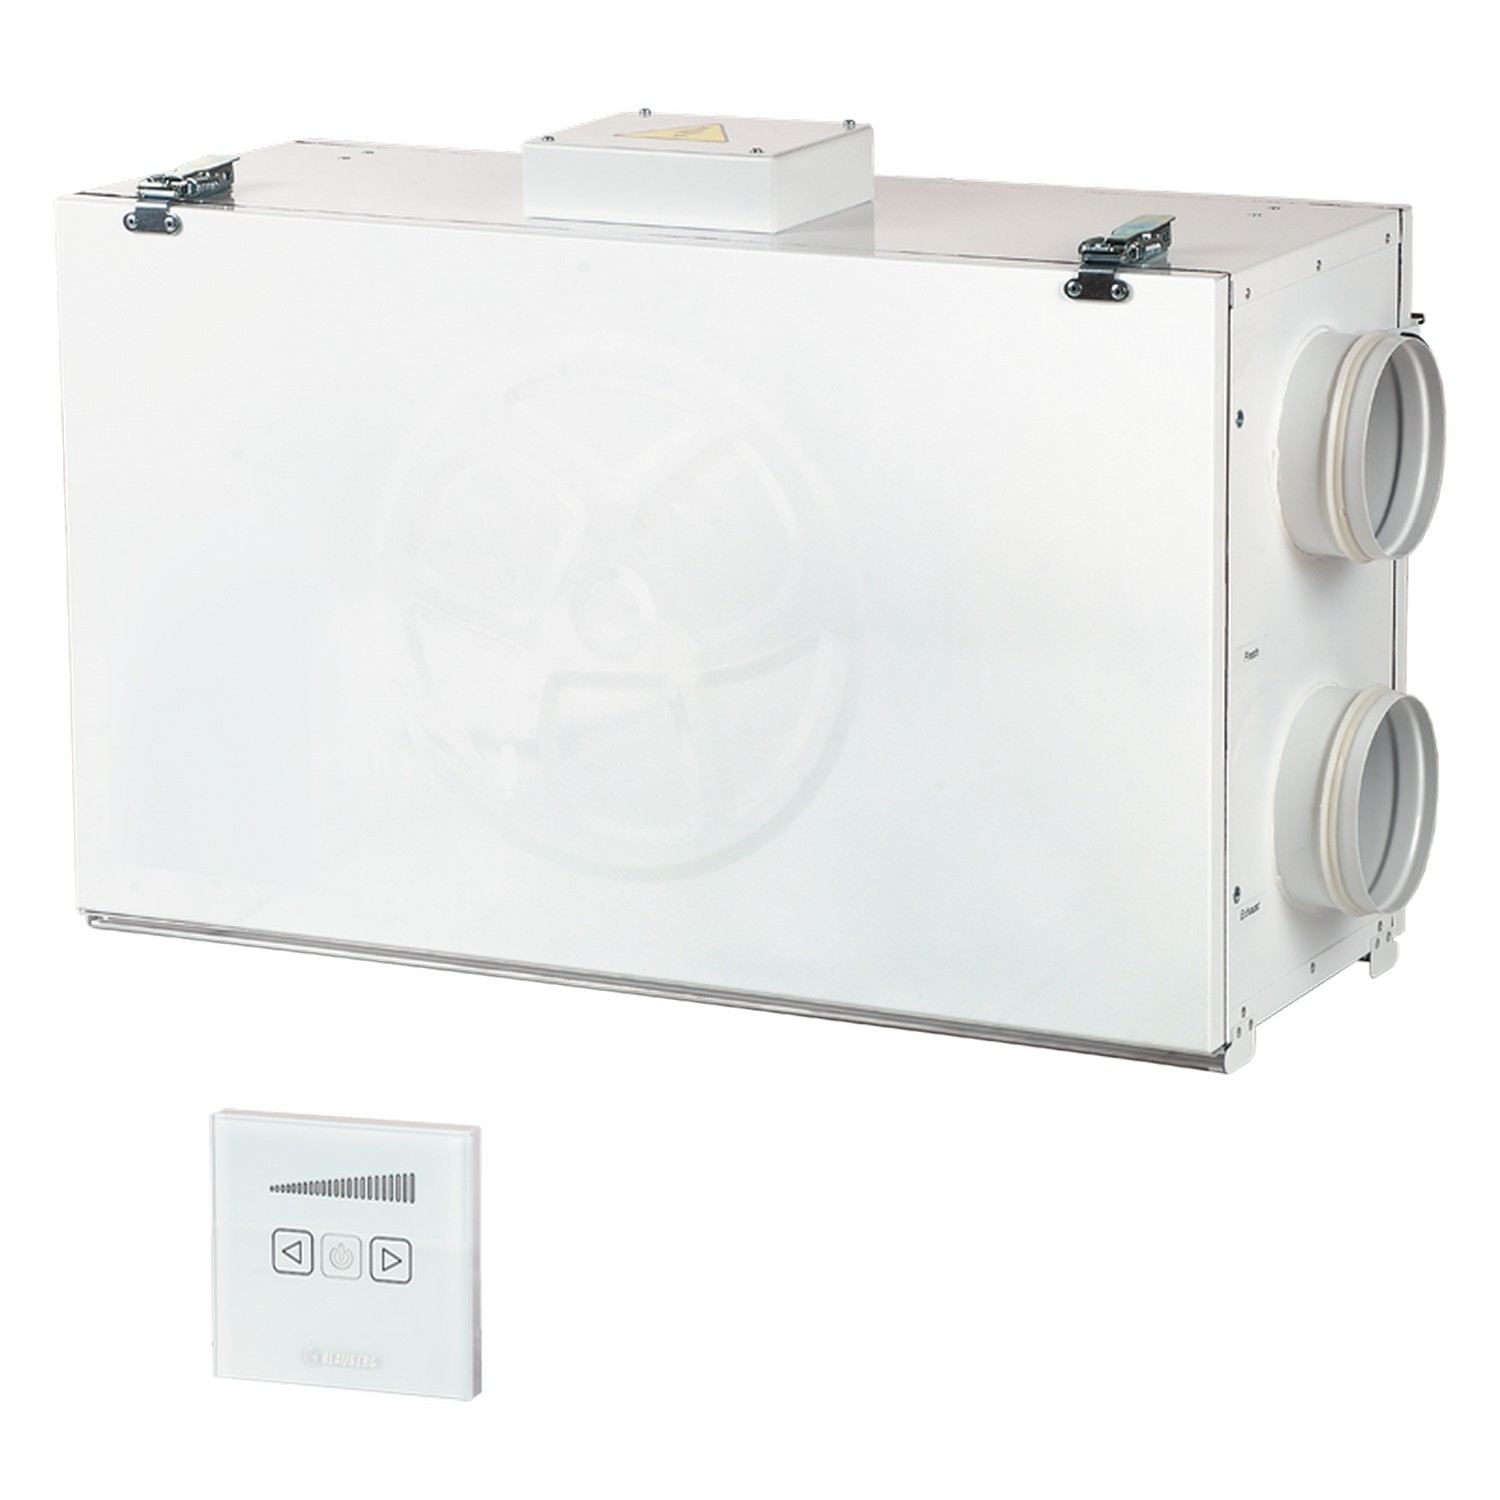 Приточно-вытяжная установка Blauberg Komfort Ultra L250-E S12 white в интернет-магазине, главное фото